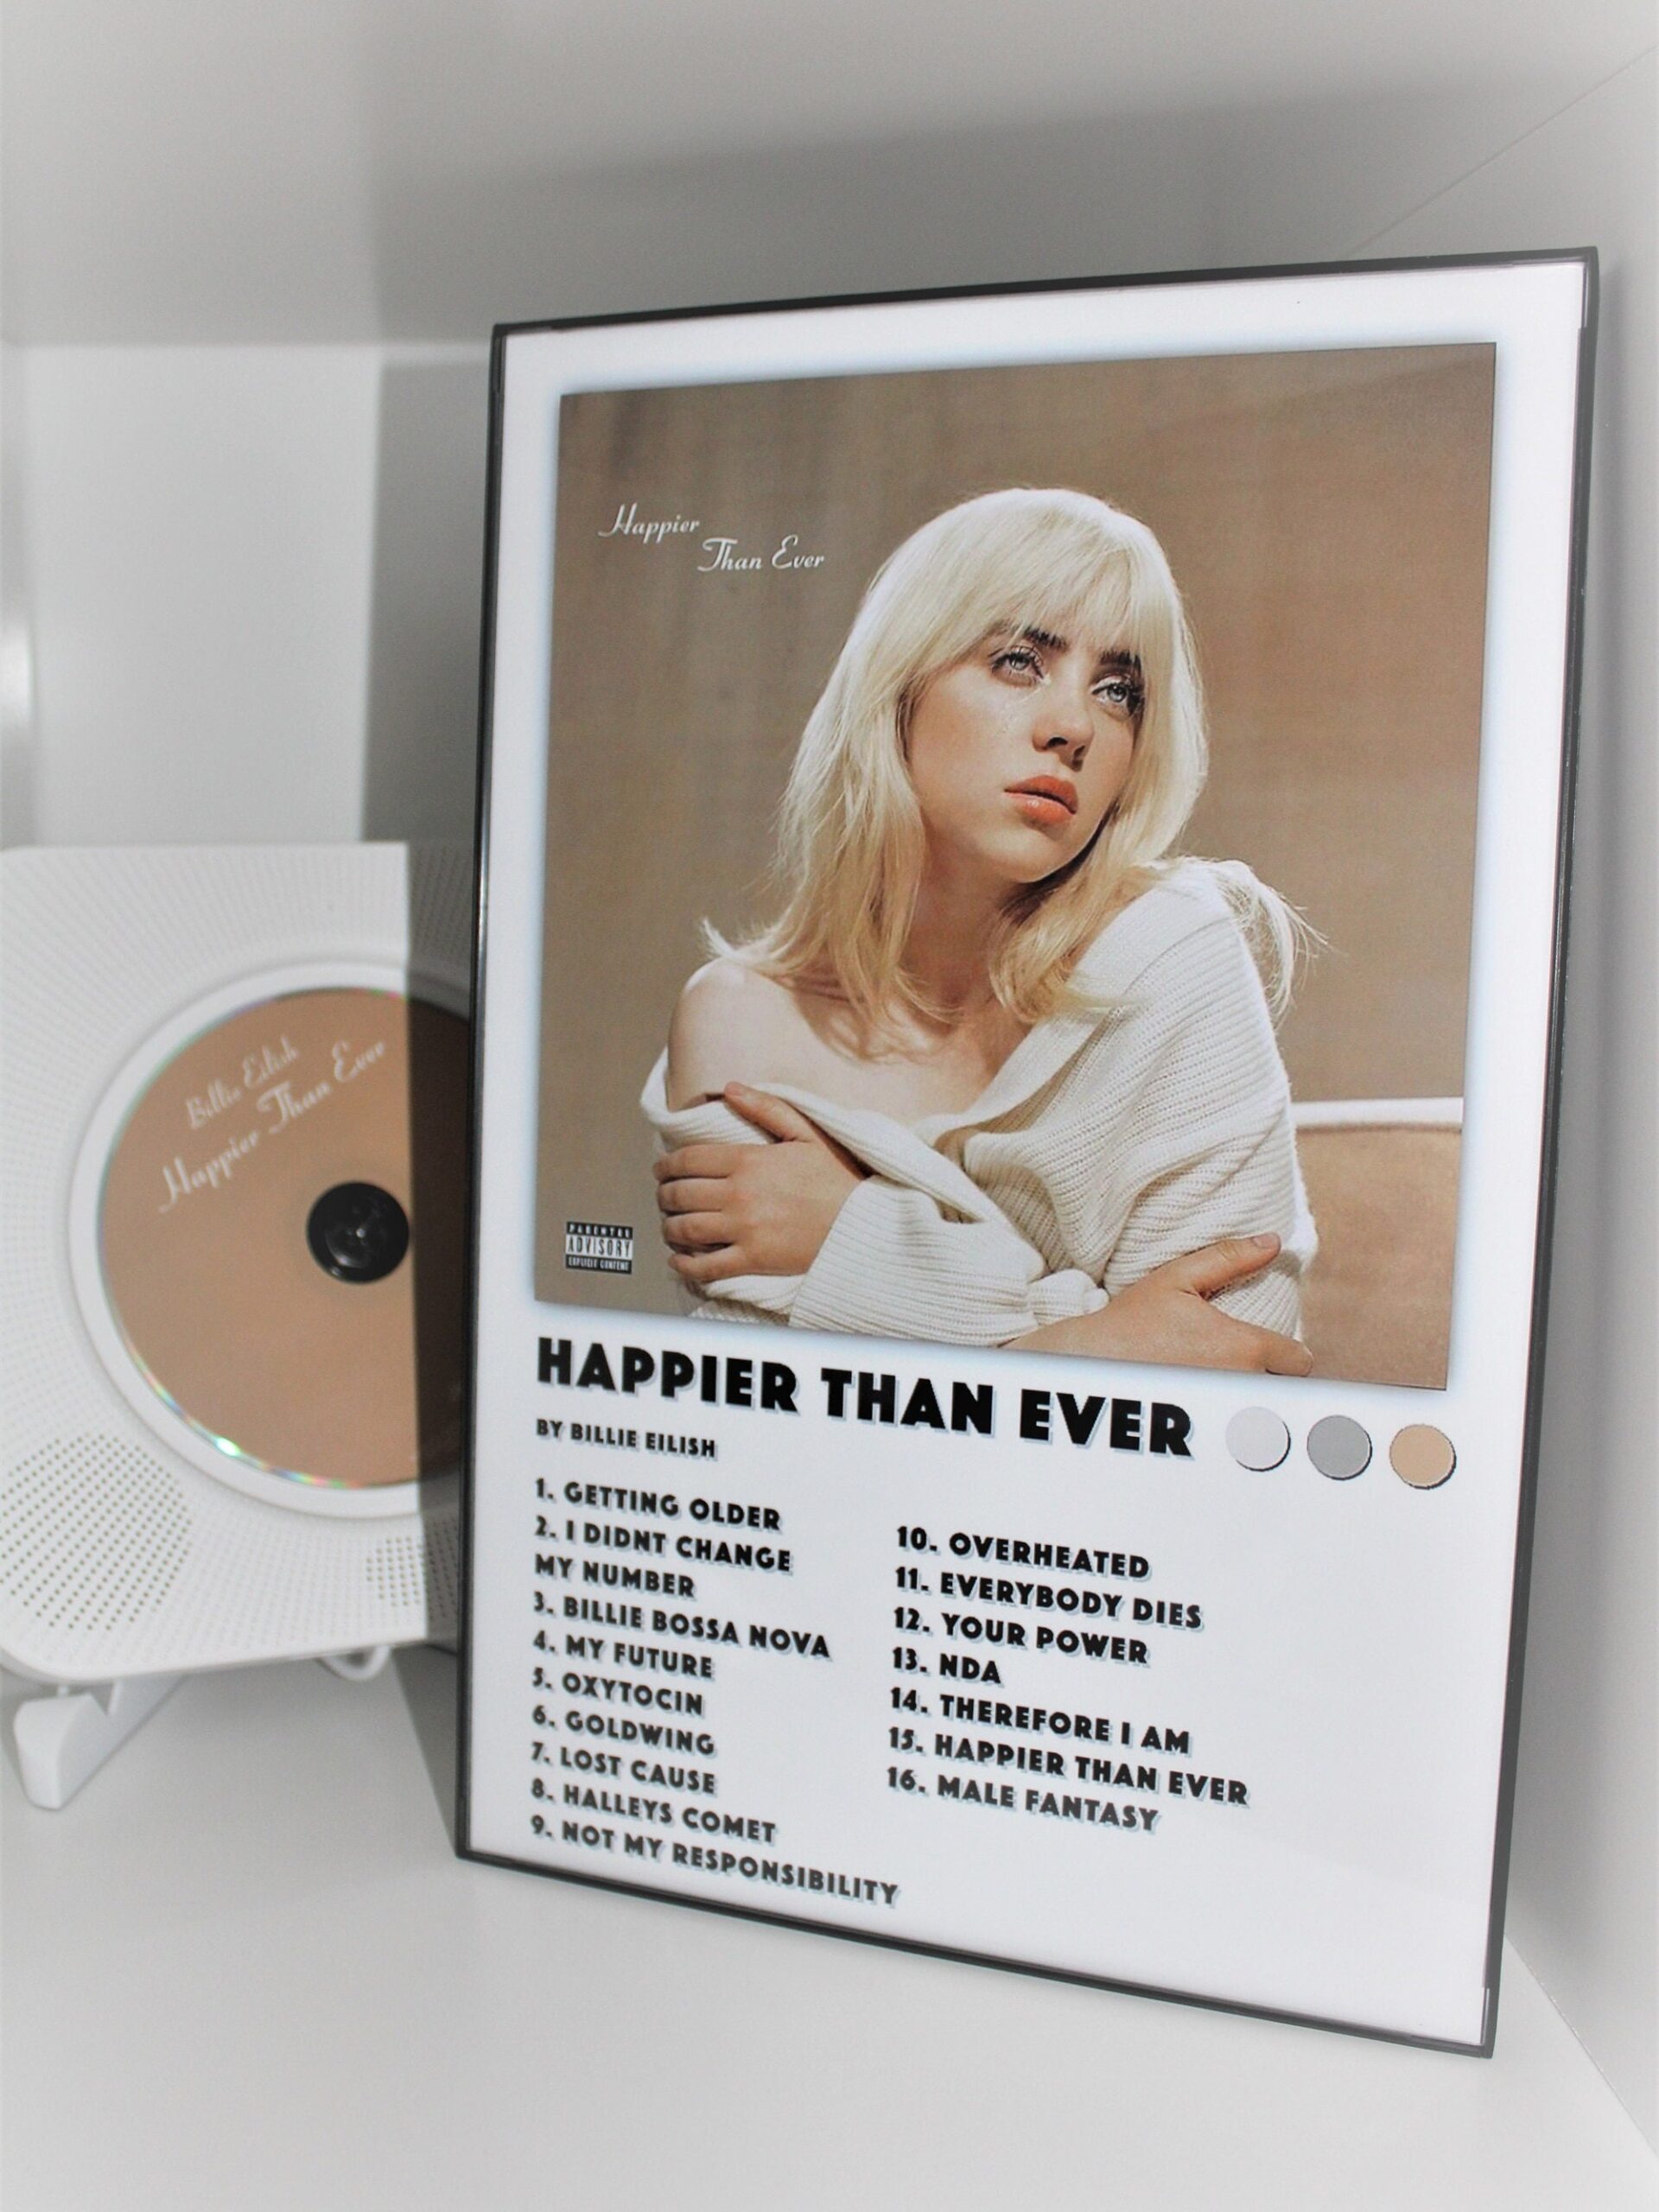 Billie Eilish - Happier Than Ever [CD/Photo Book]